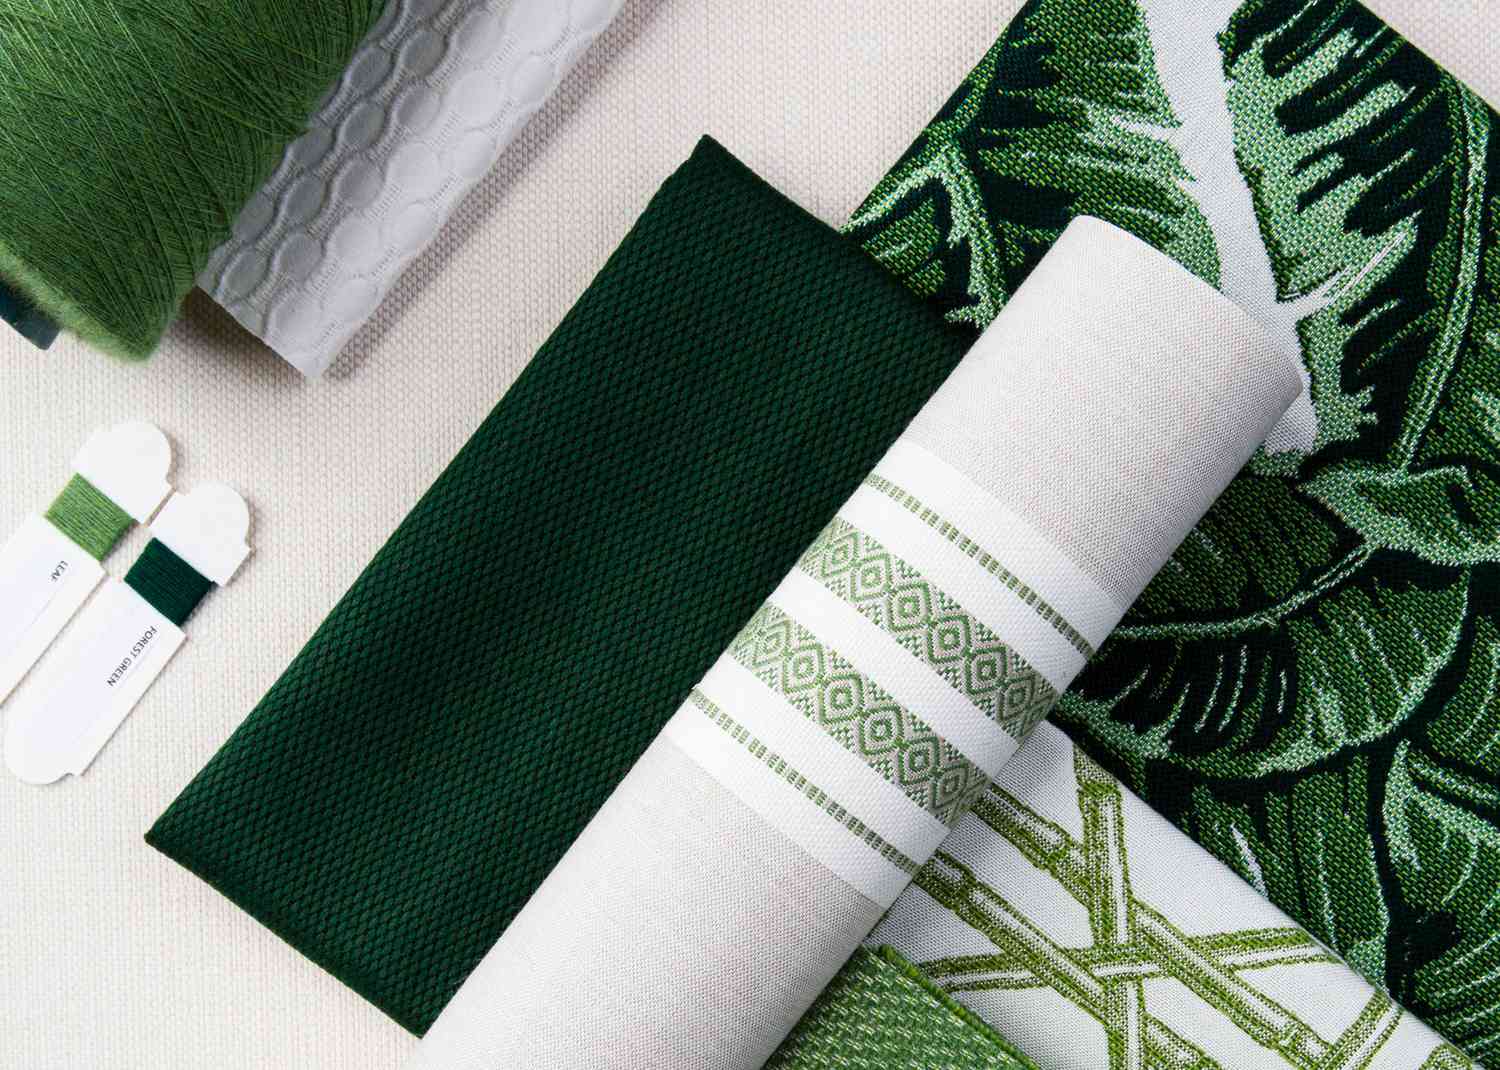 Paleta de tecidos verdes da Sunbrella